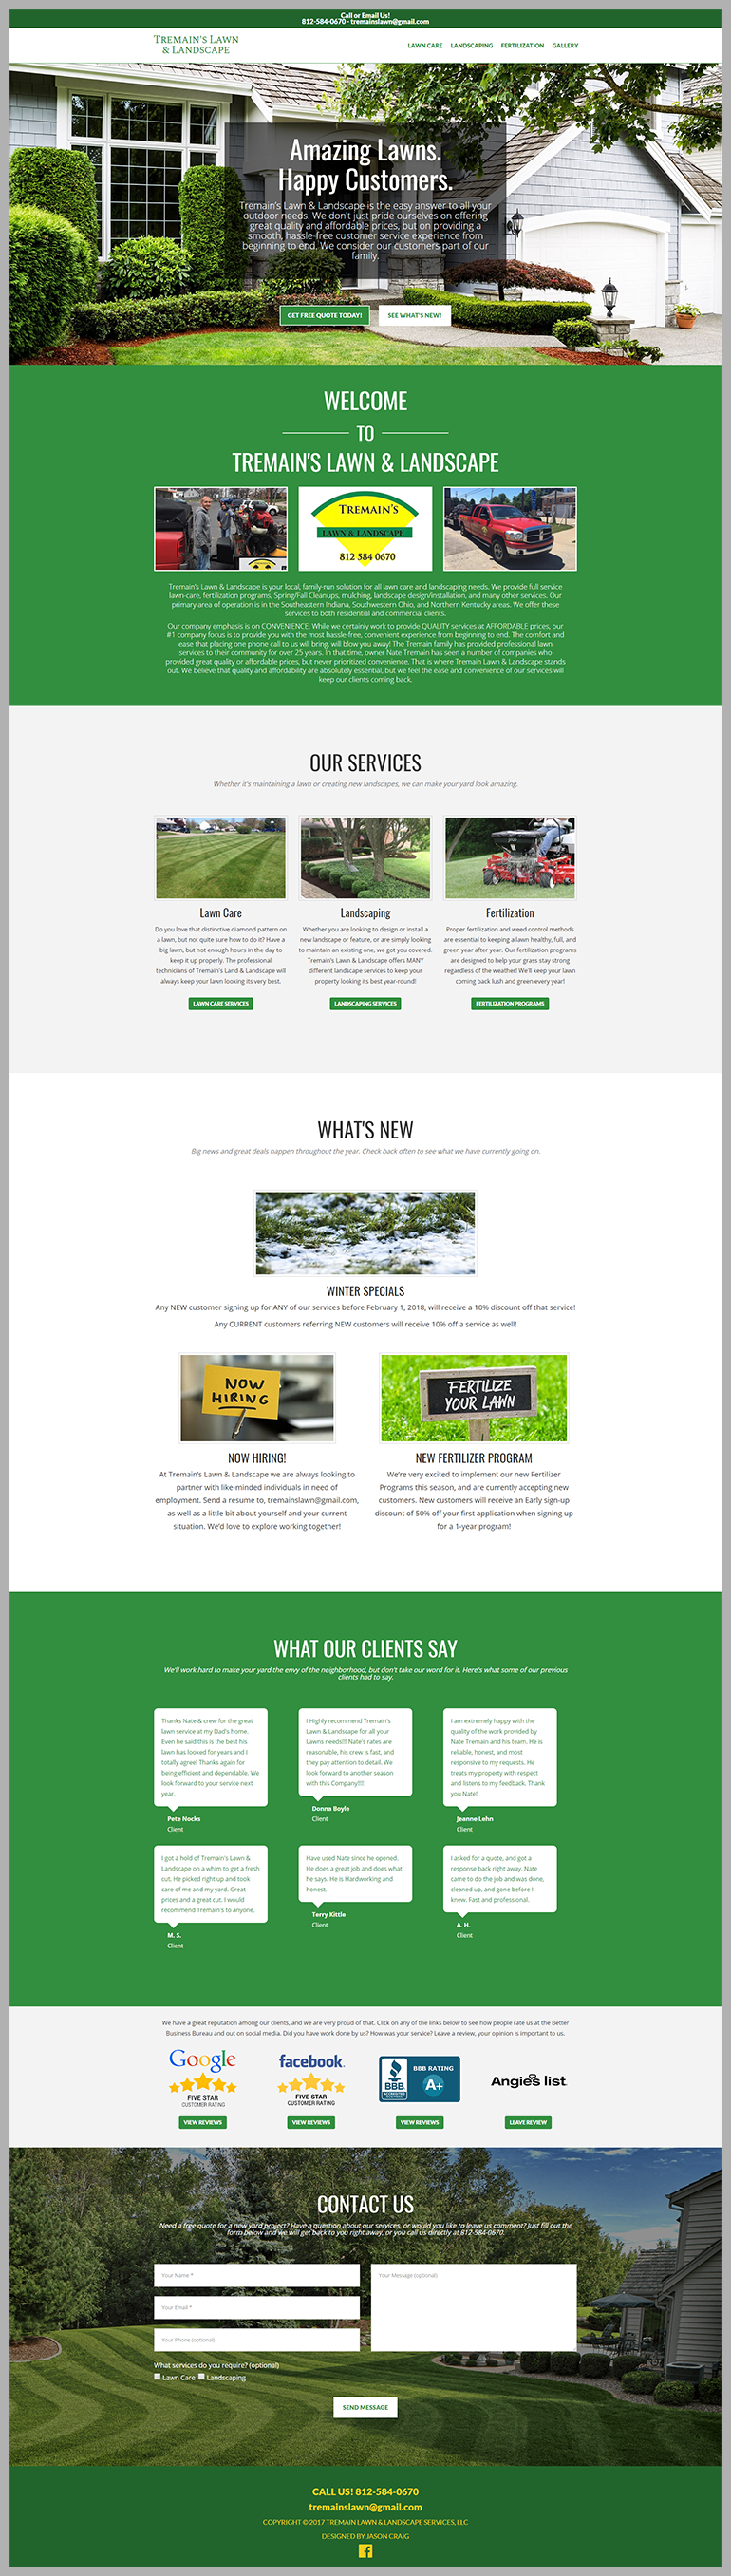 Header section of Tremain's Land and Landscape website.